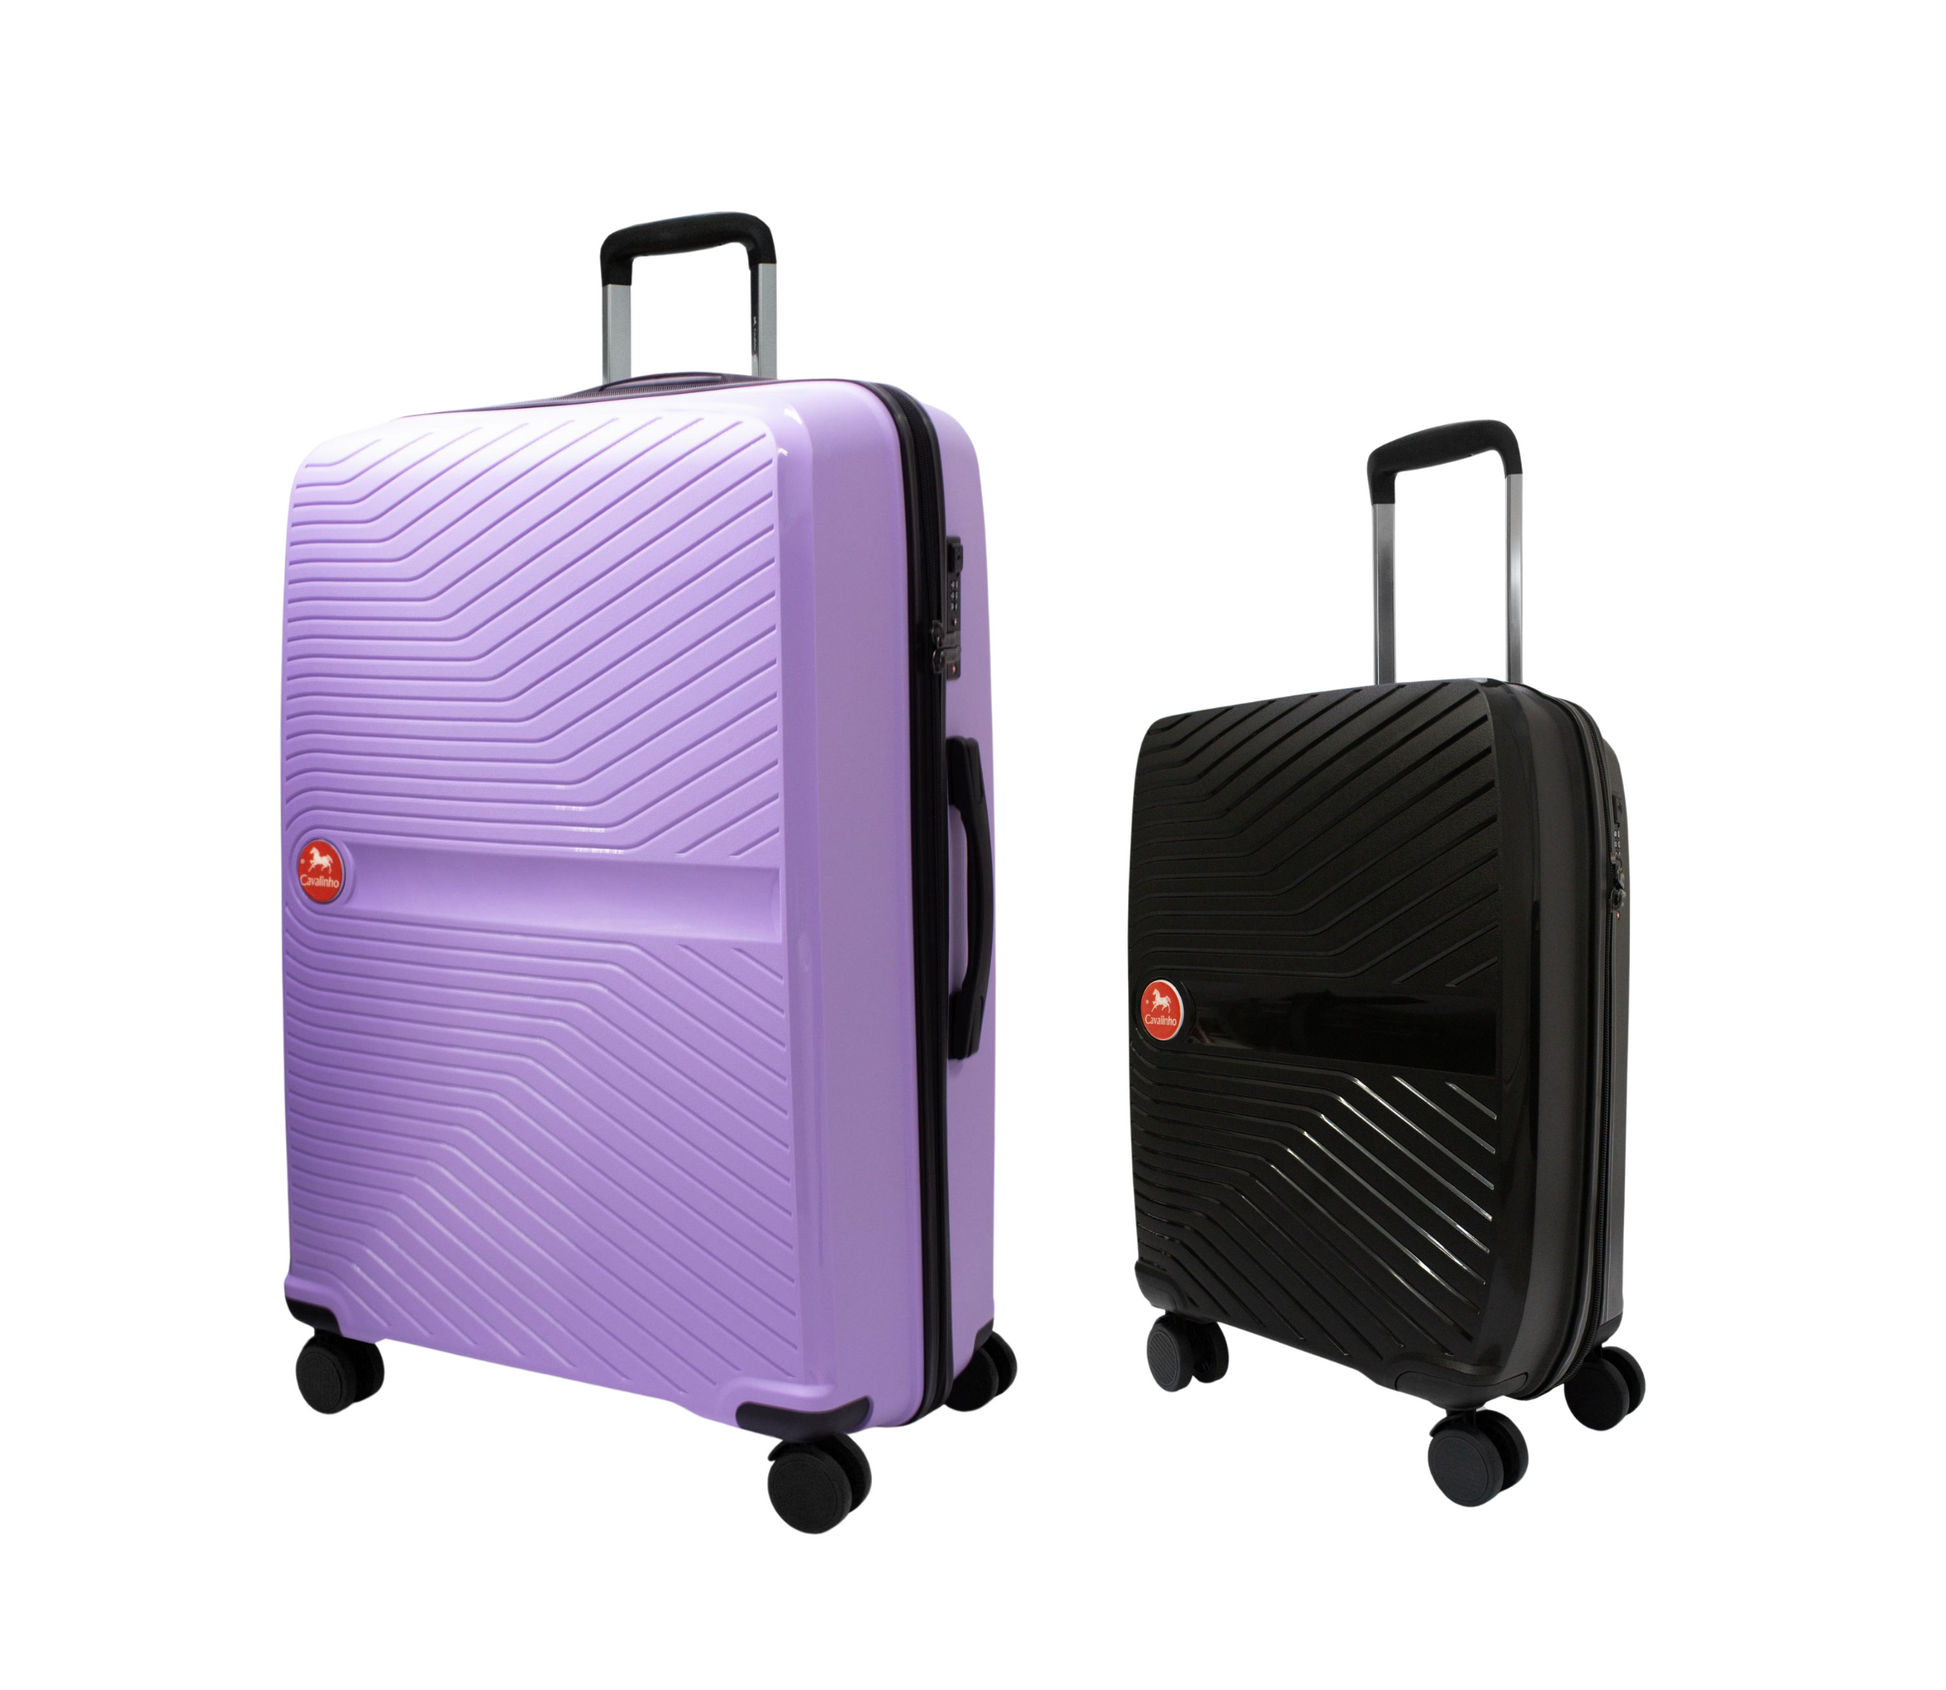 Cavalinho Colorful 2 Piece Luggage Set (19" & 28") - Black Lilac - 68020004.0139.S1928._2